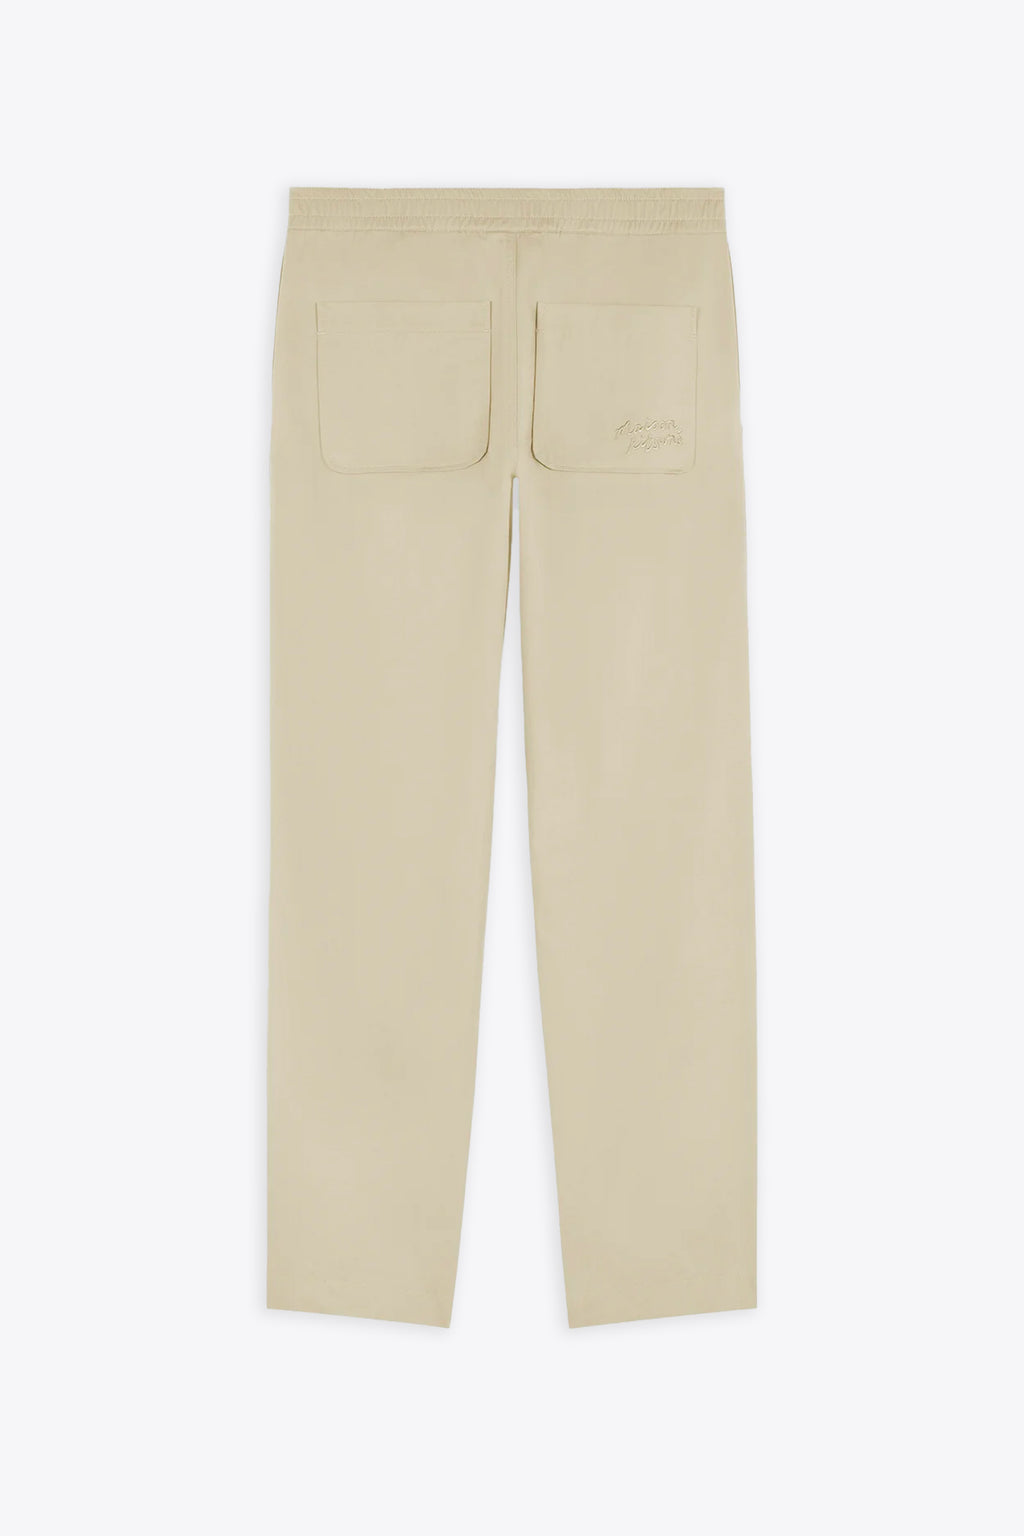 alt-image__Light-beige-cotton-pants-with-elastic-waistband---Casual-Pants